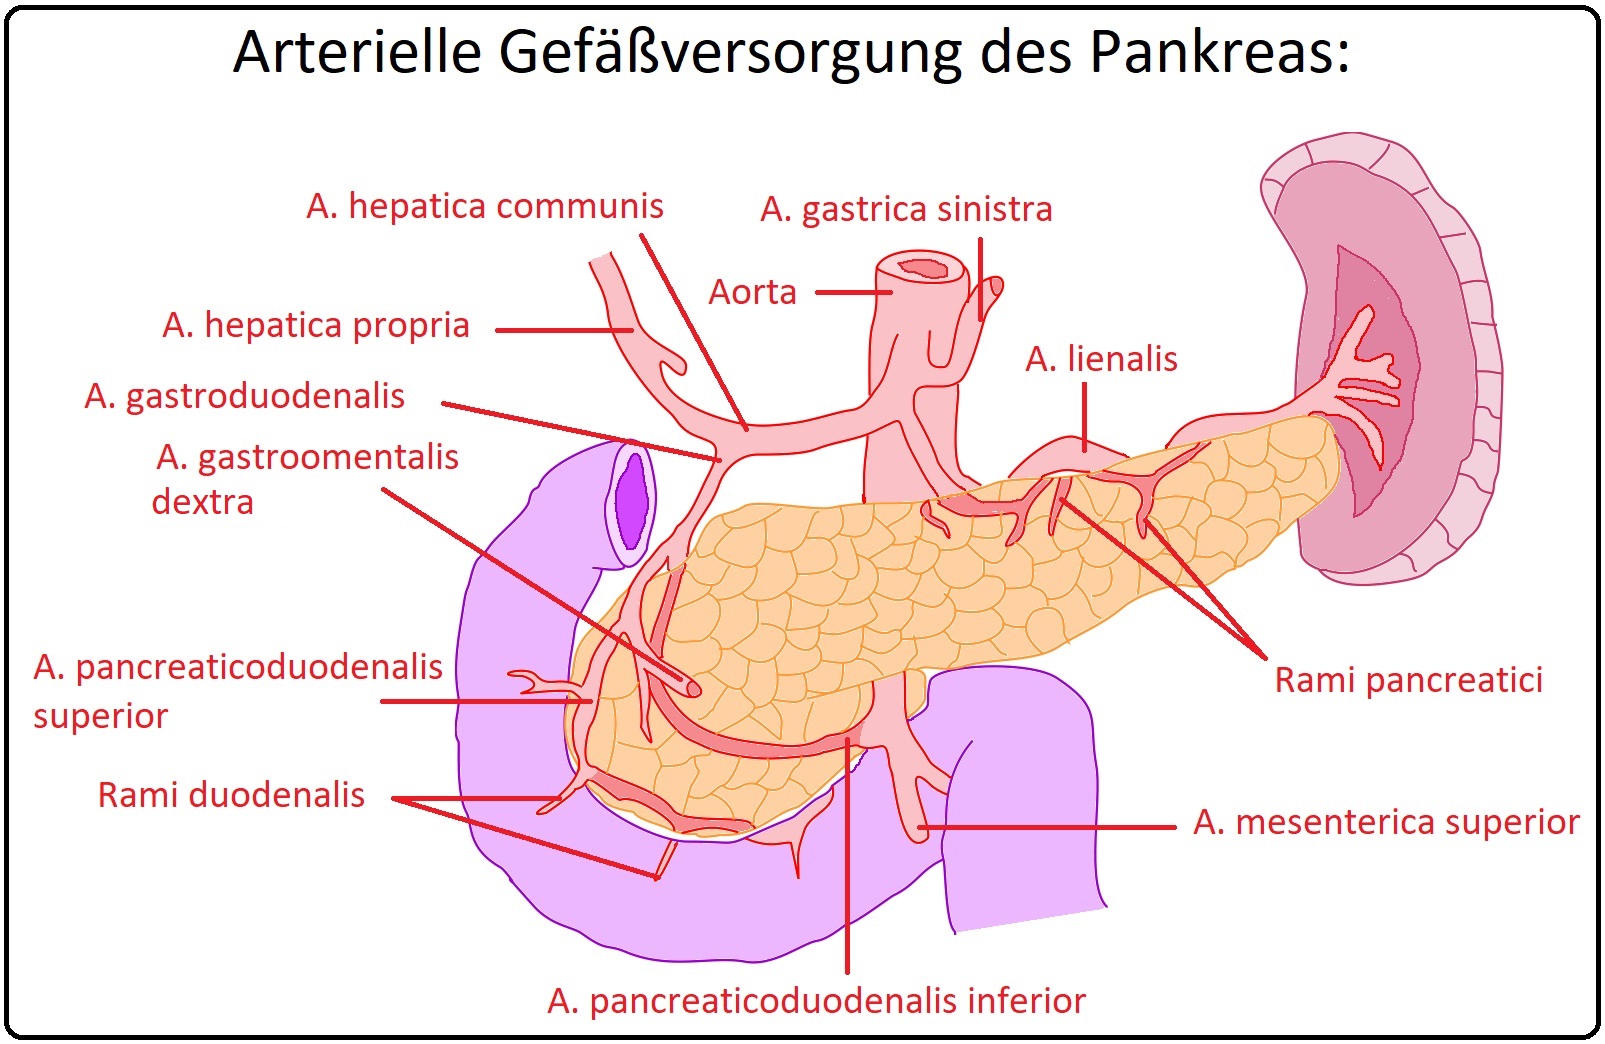 556 Arterielle Gefäßversorgung des Pankreas